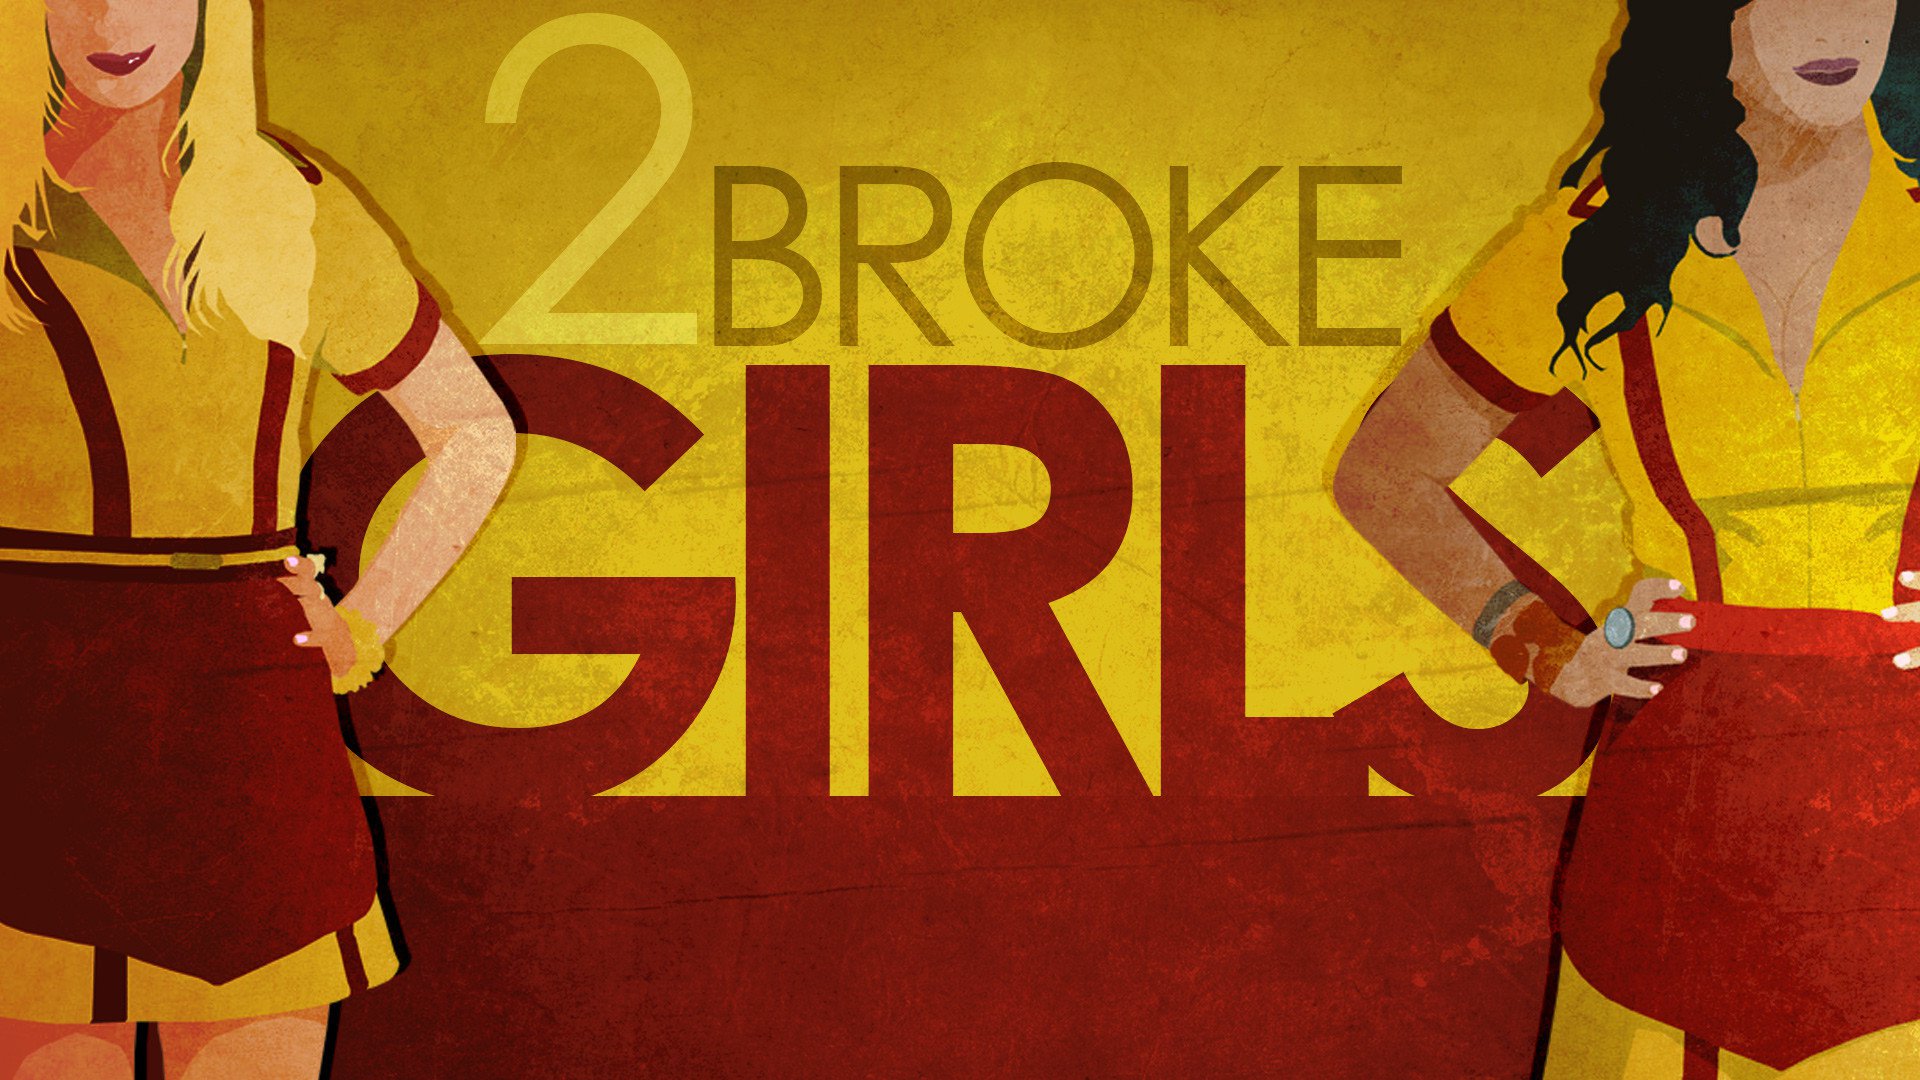 TV Show 2 Broke Girls HD Wallpaper | Background Image